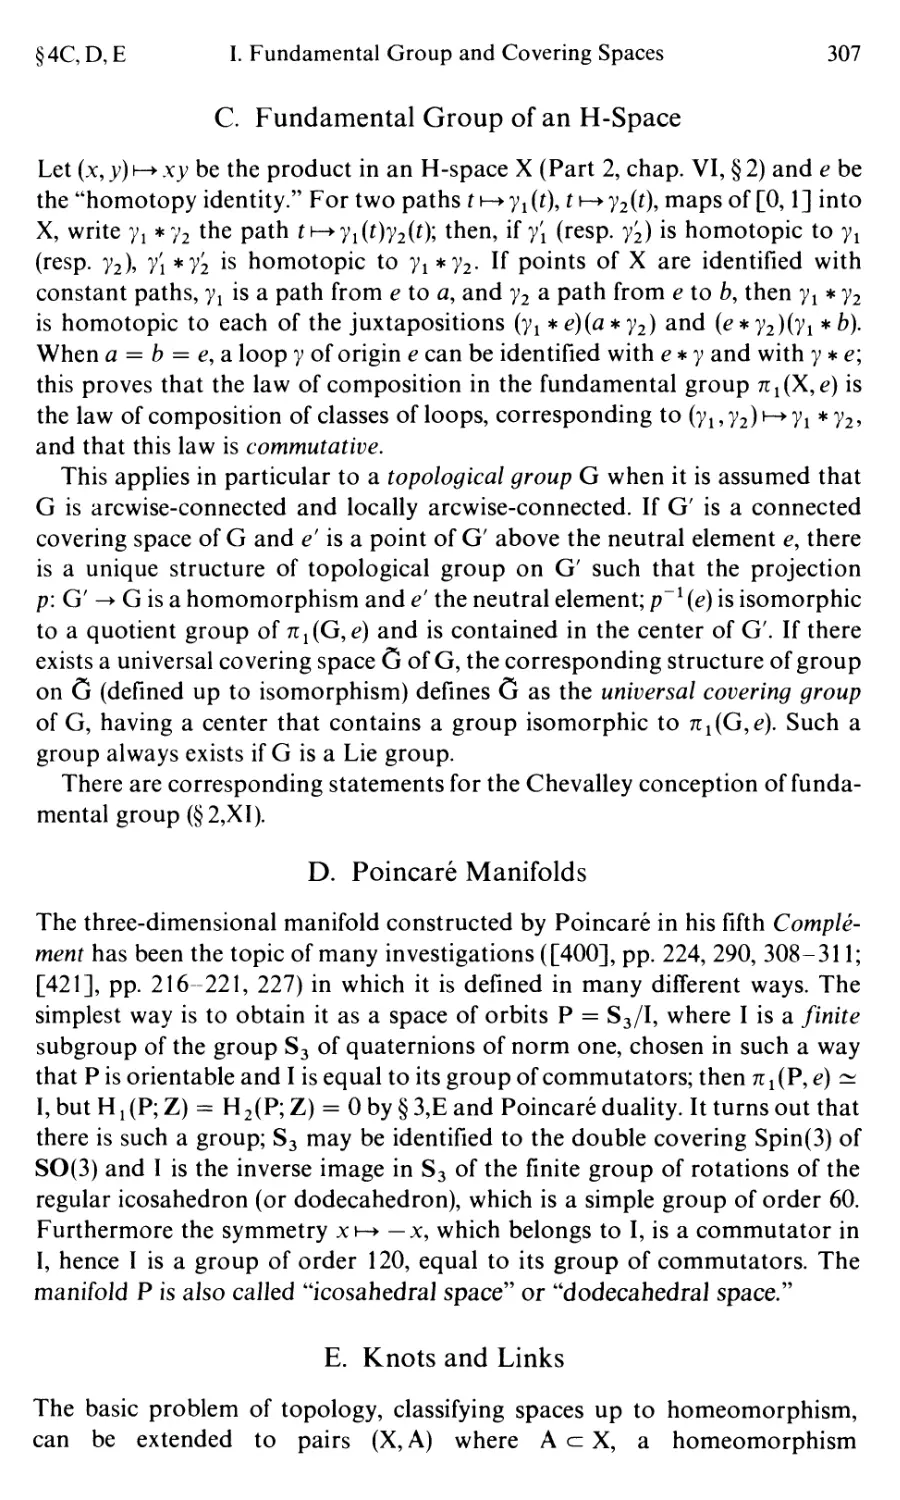 C. Fundamental Group of a H-Space
D. Poincaré Manifolds
E. Knots and Links